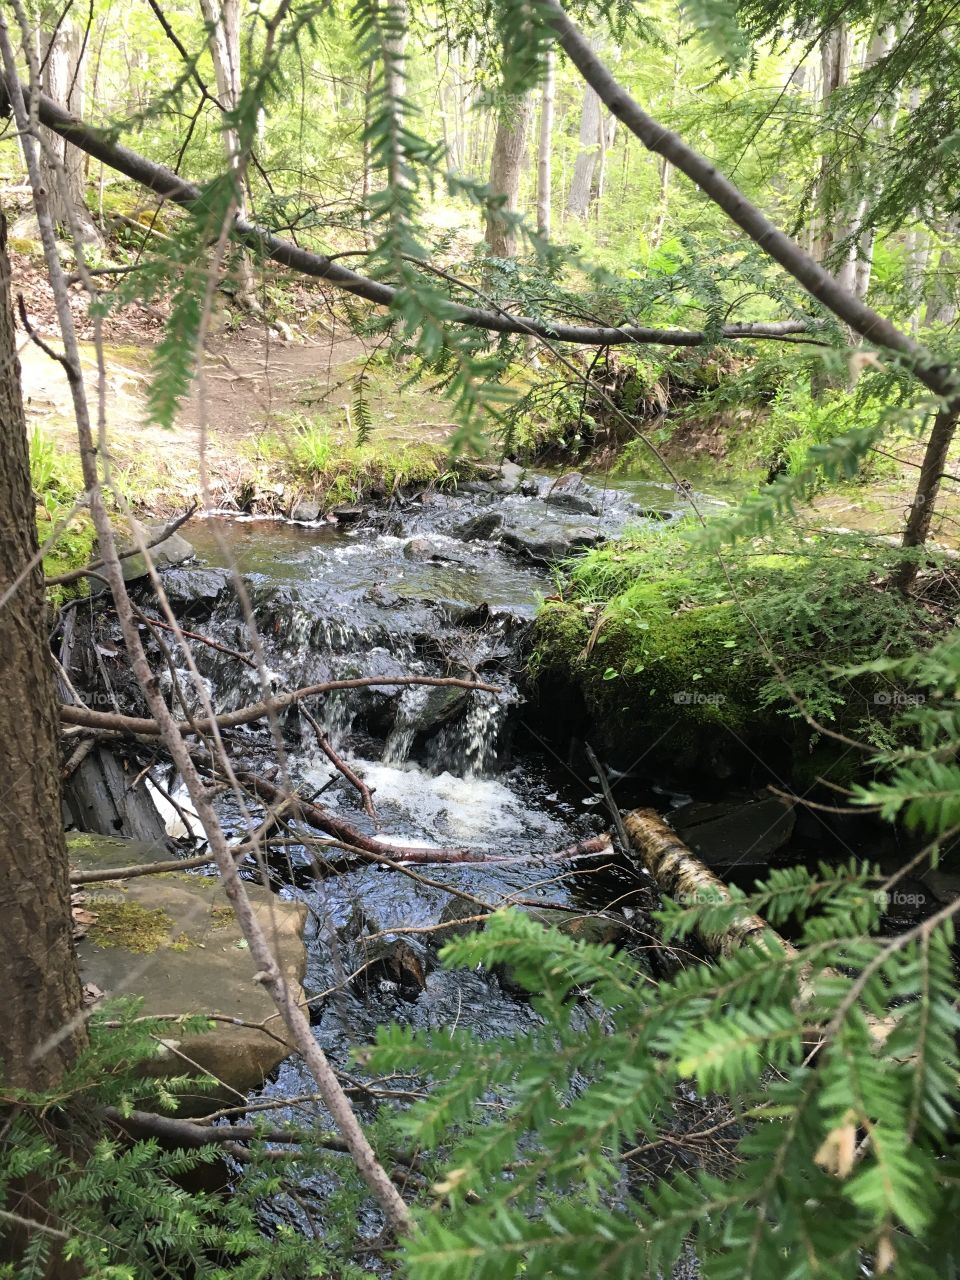 Woodsy stream